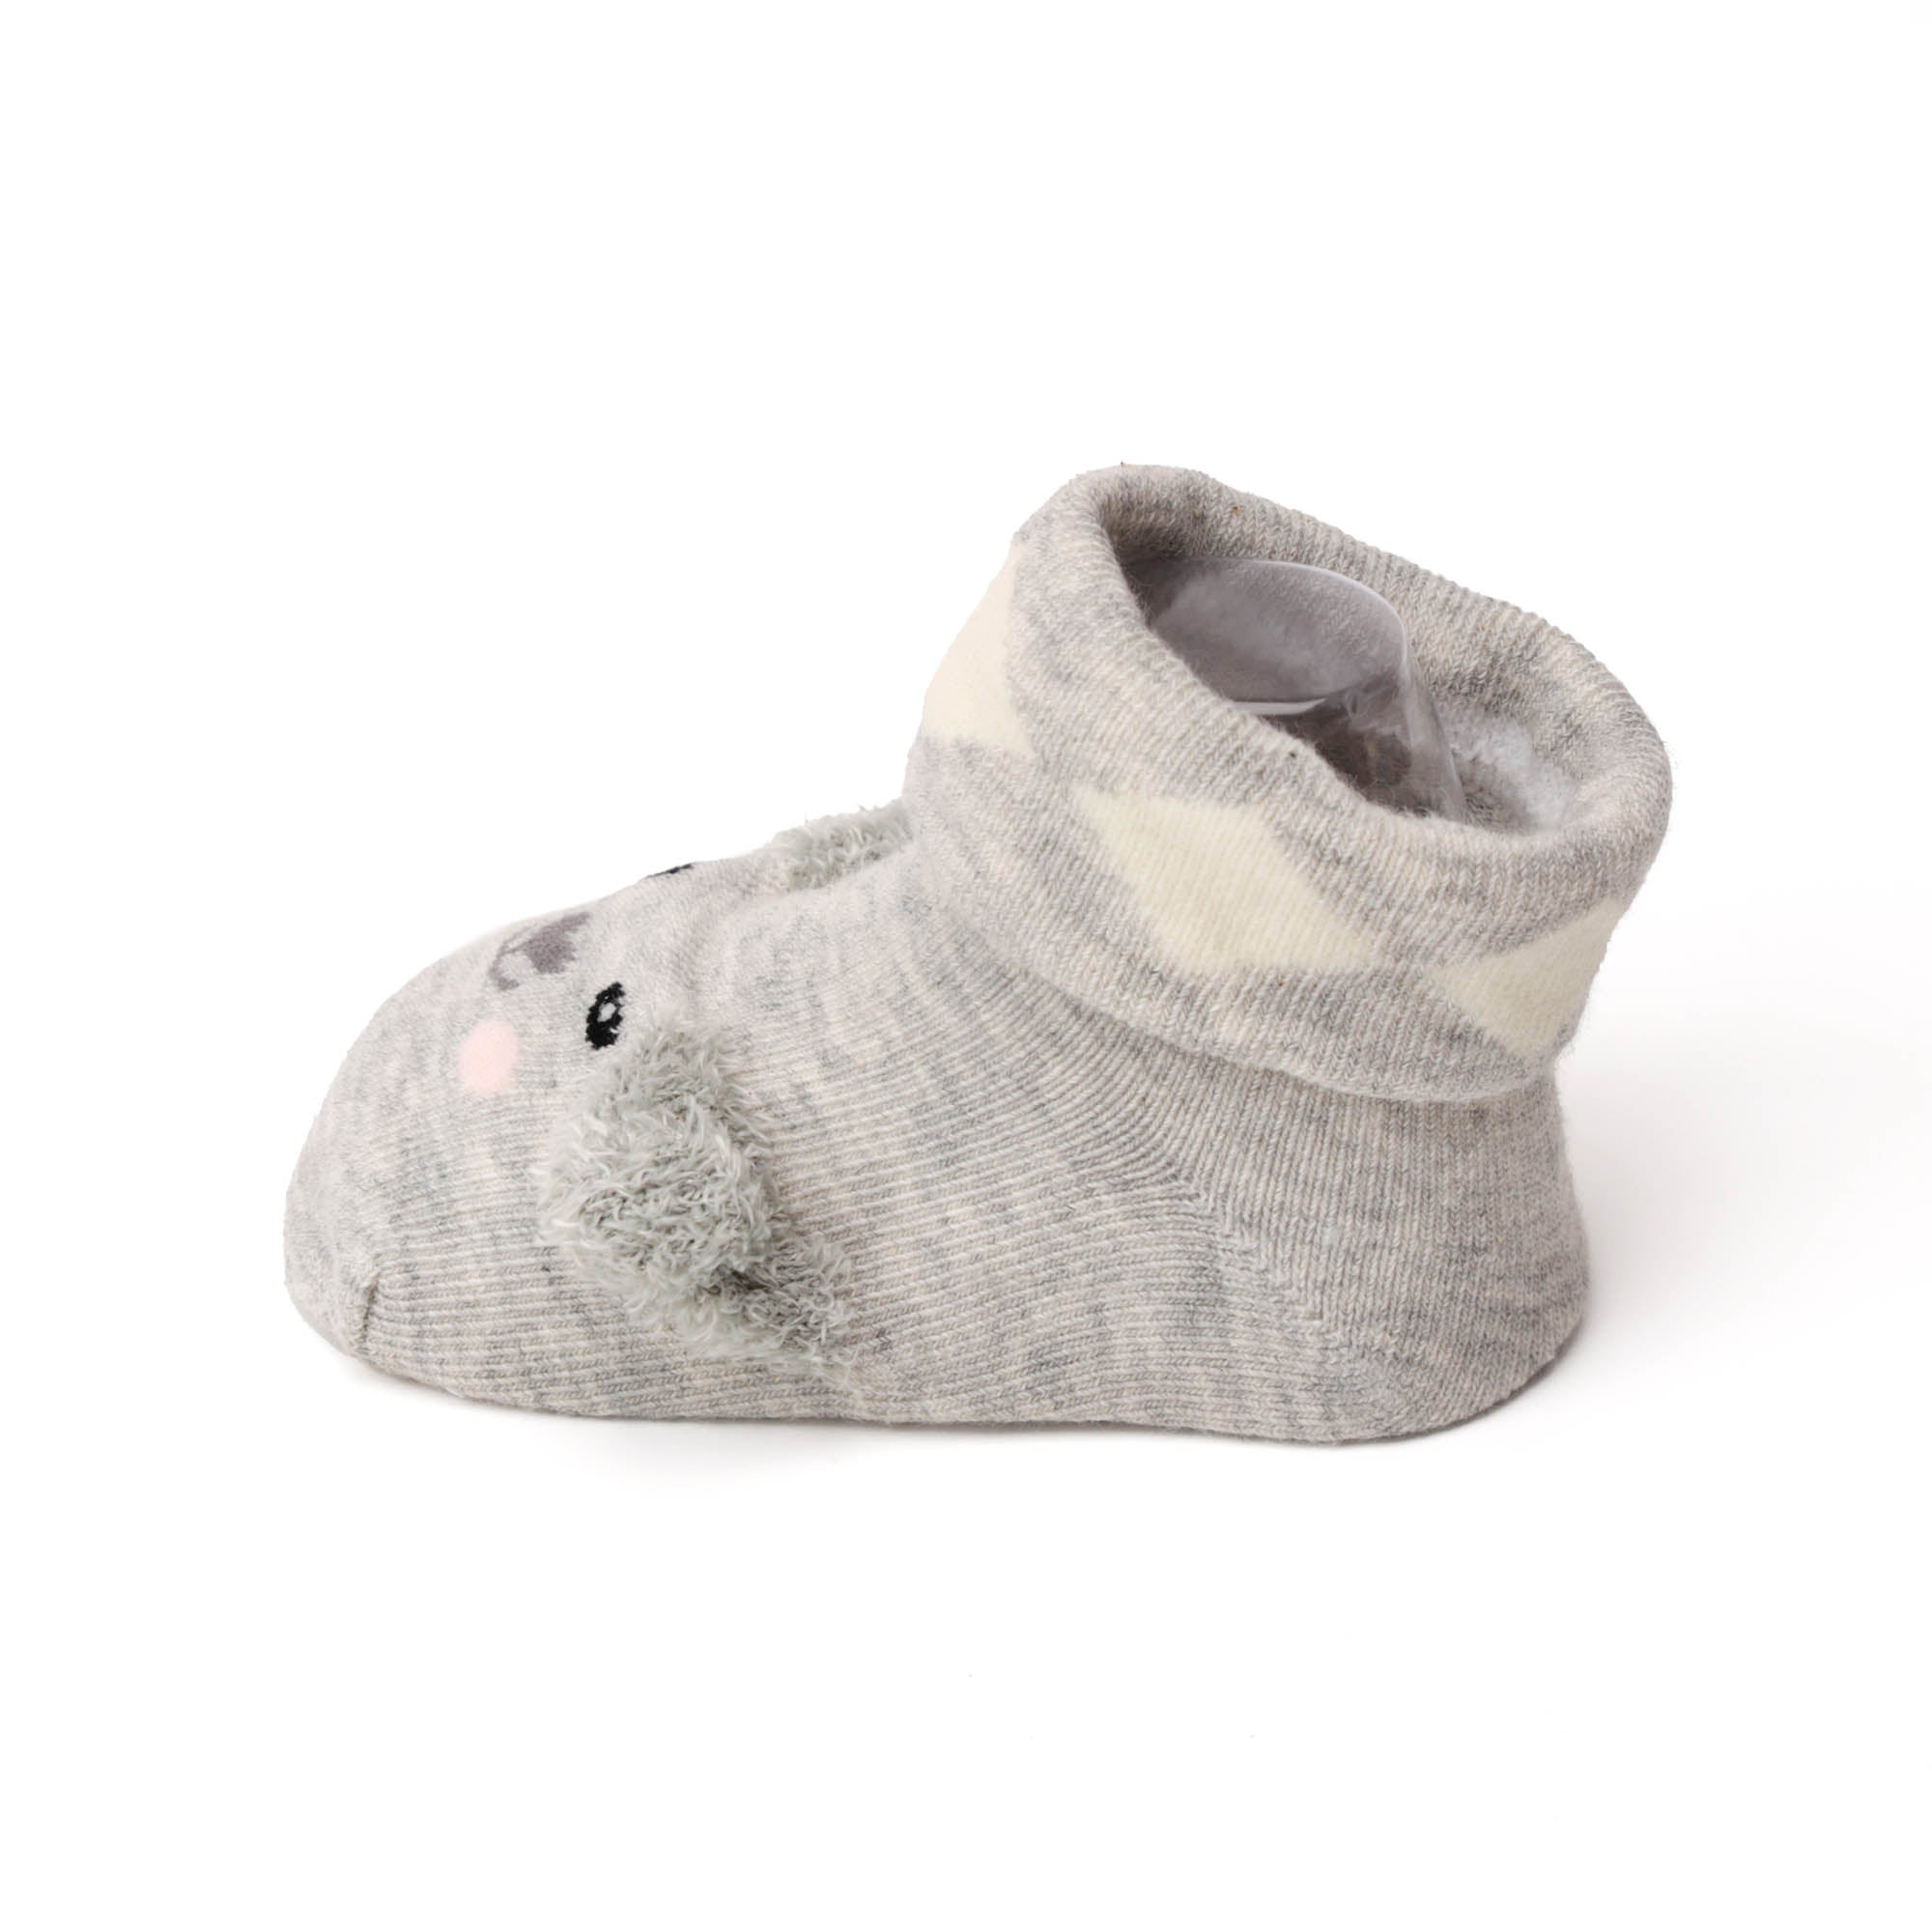 Kicks & Crawl- Adorable Animals Pink & Grey Socks- 2 Pack